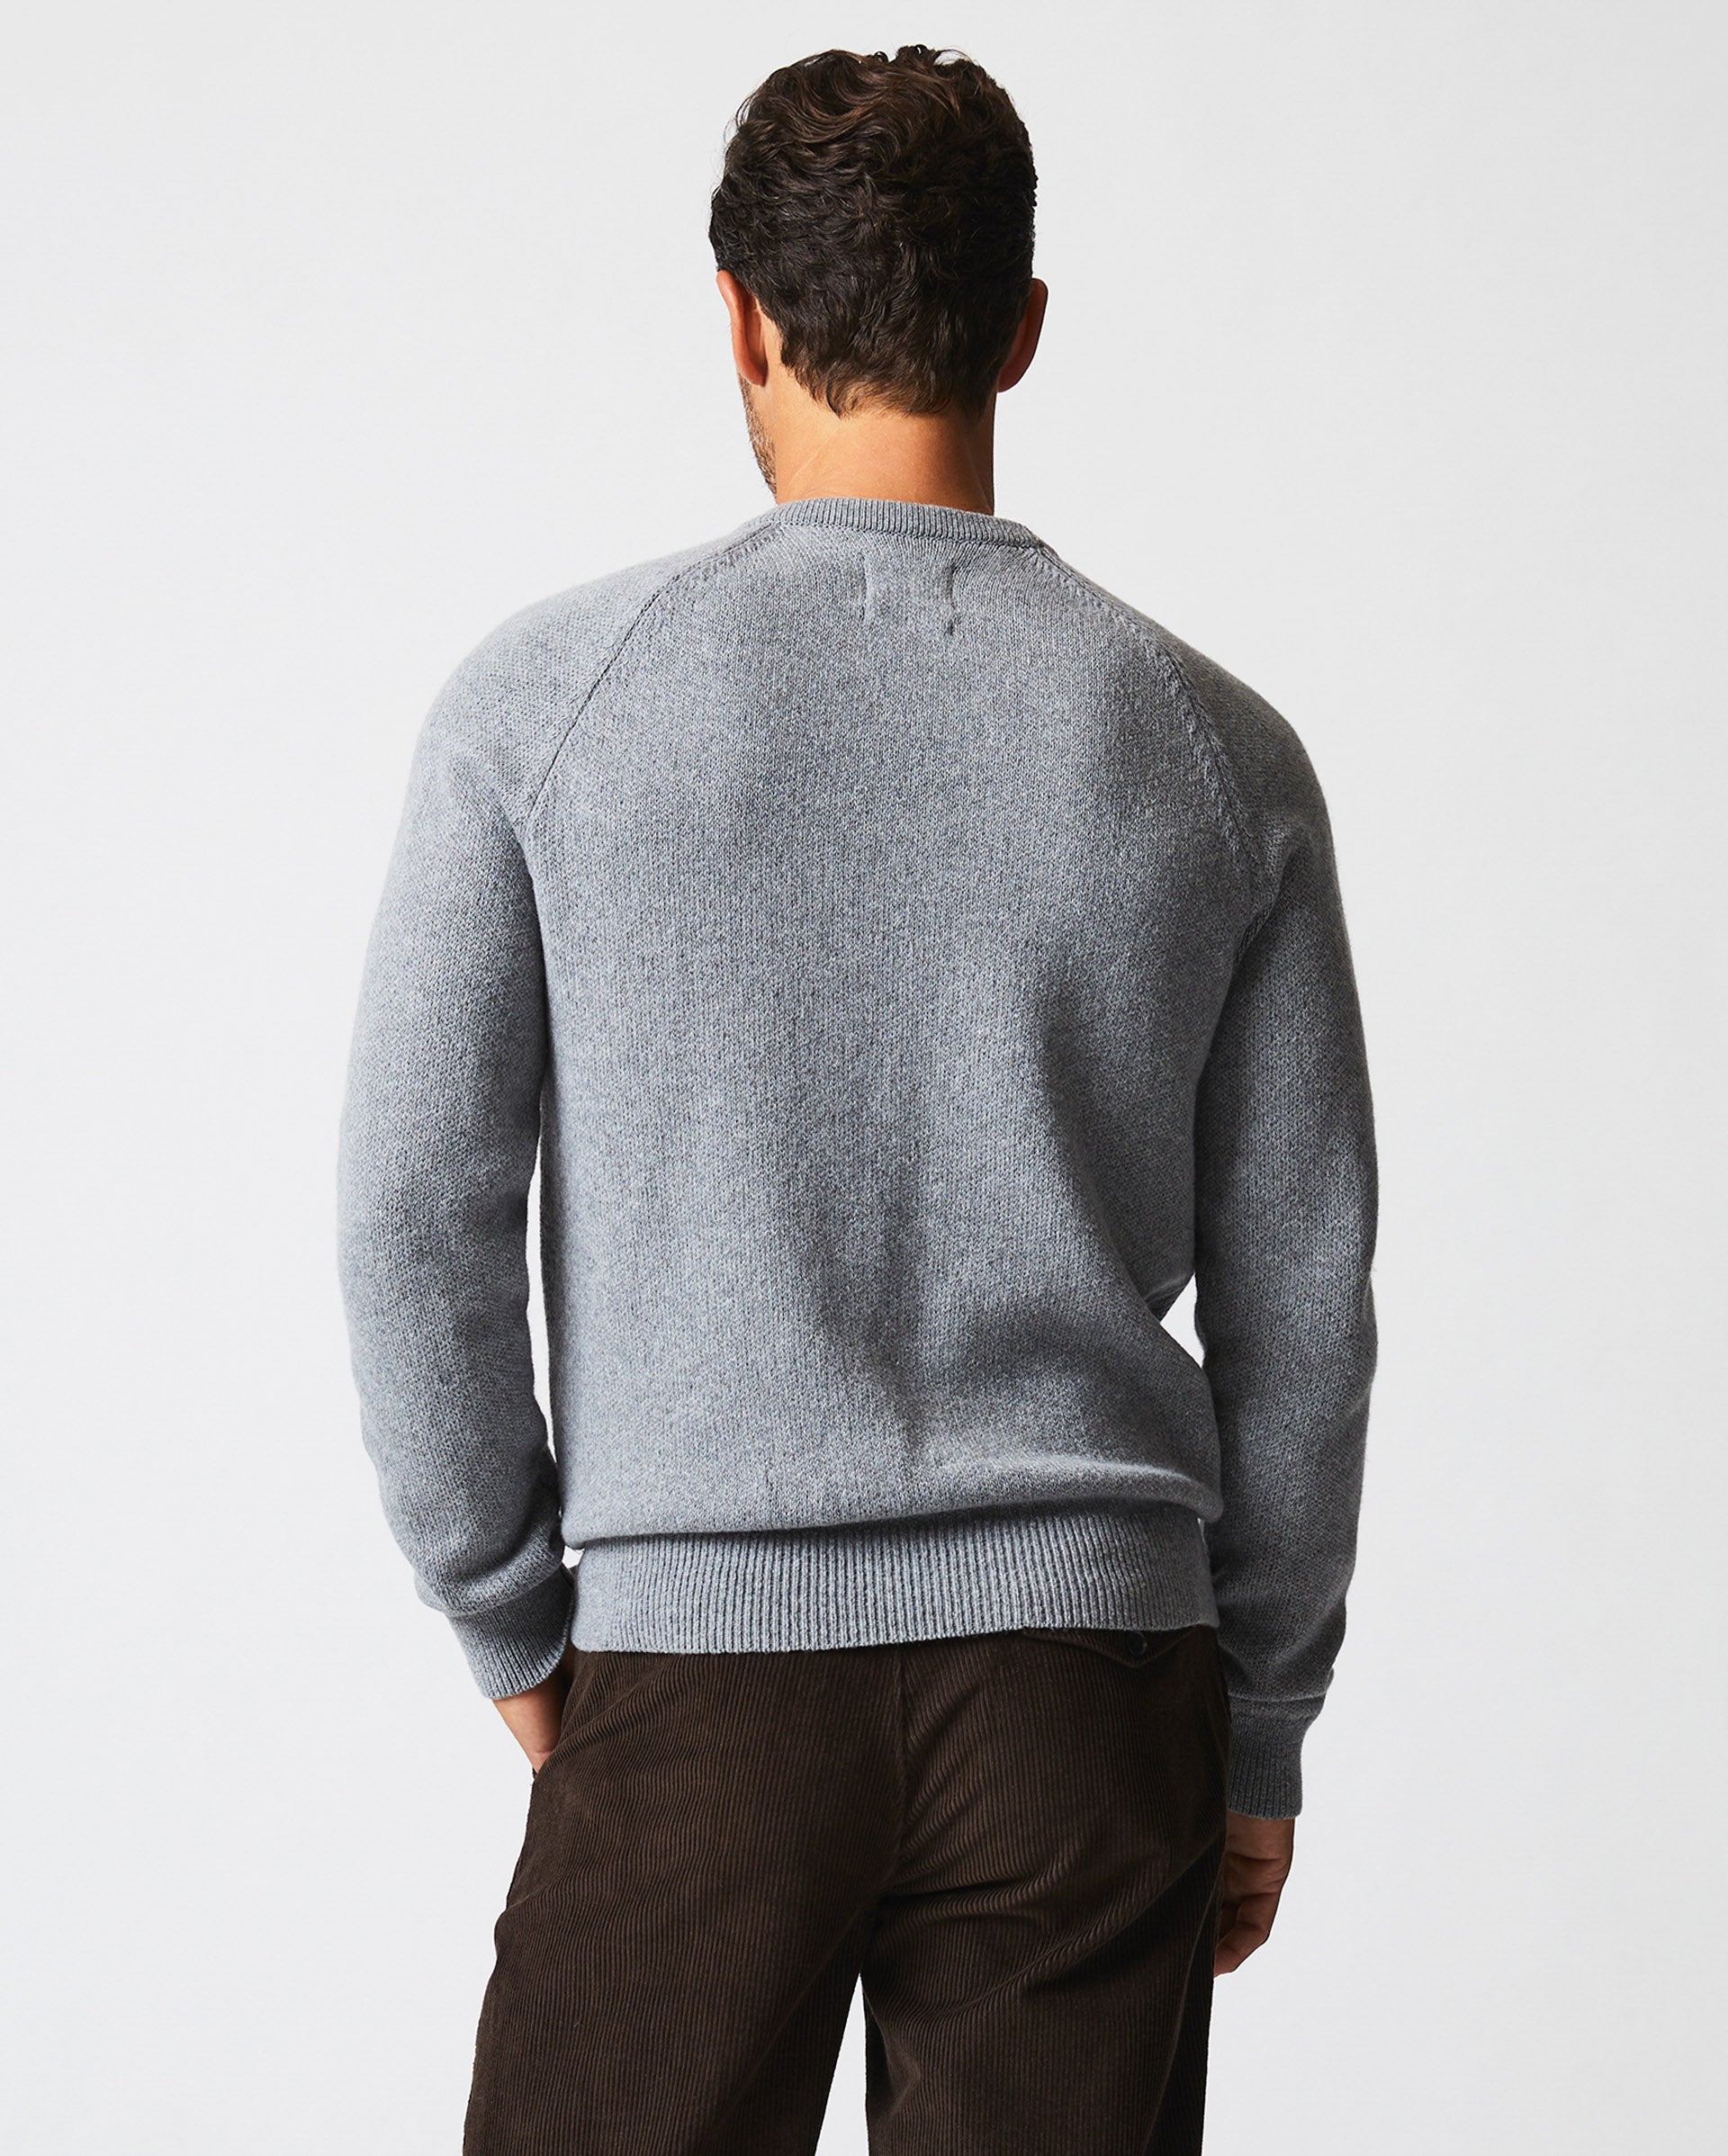 Reed Jacquard Crew Sweater - Jaxen Grey - Men's Clothing in Minneapolis